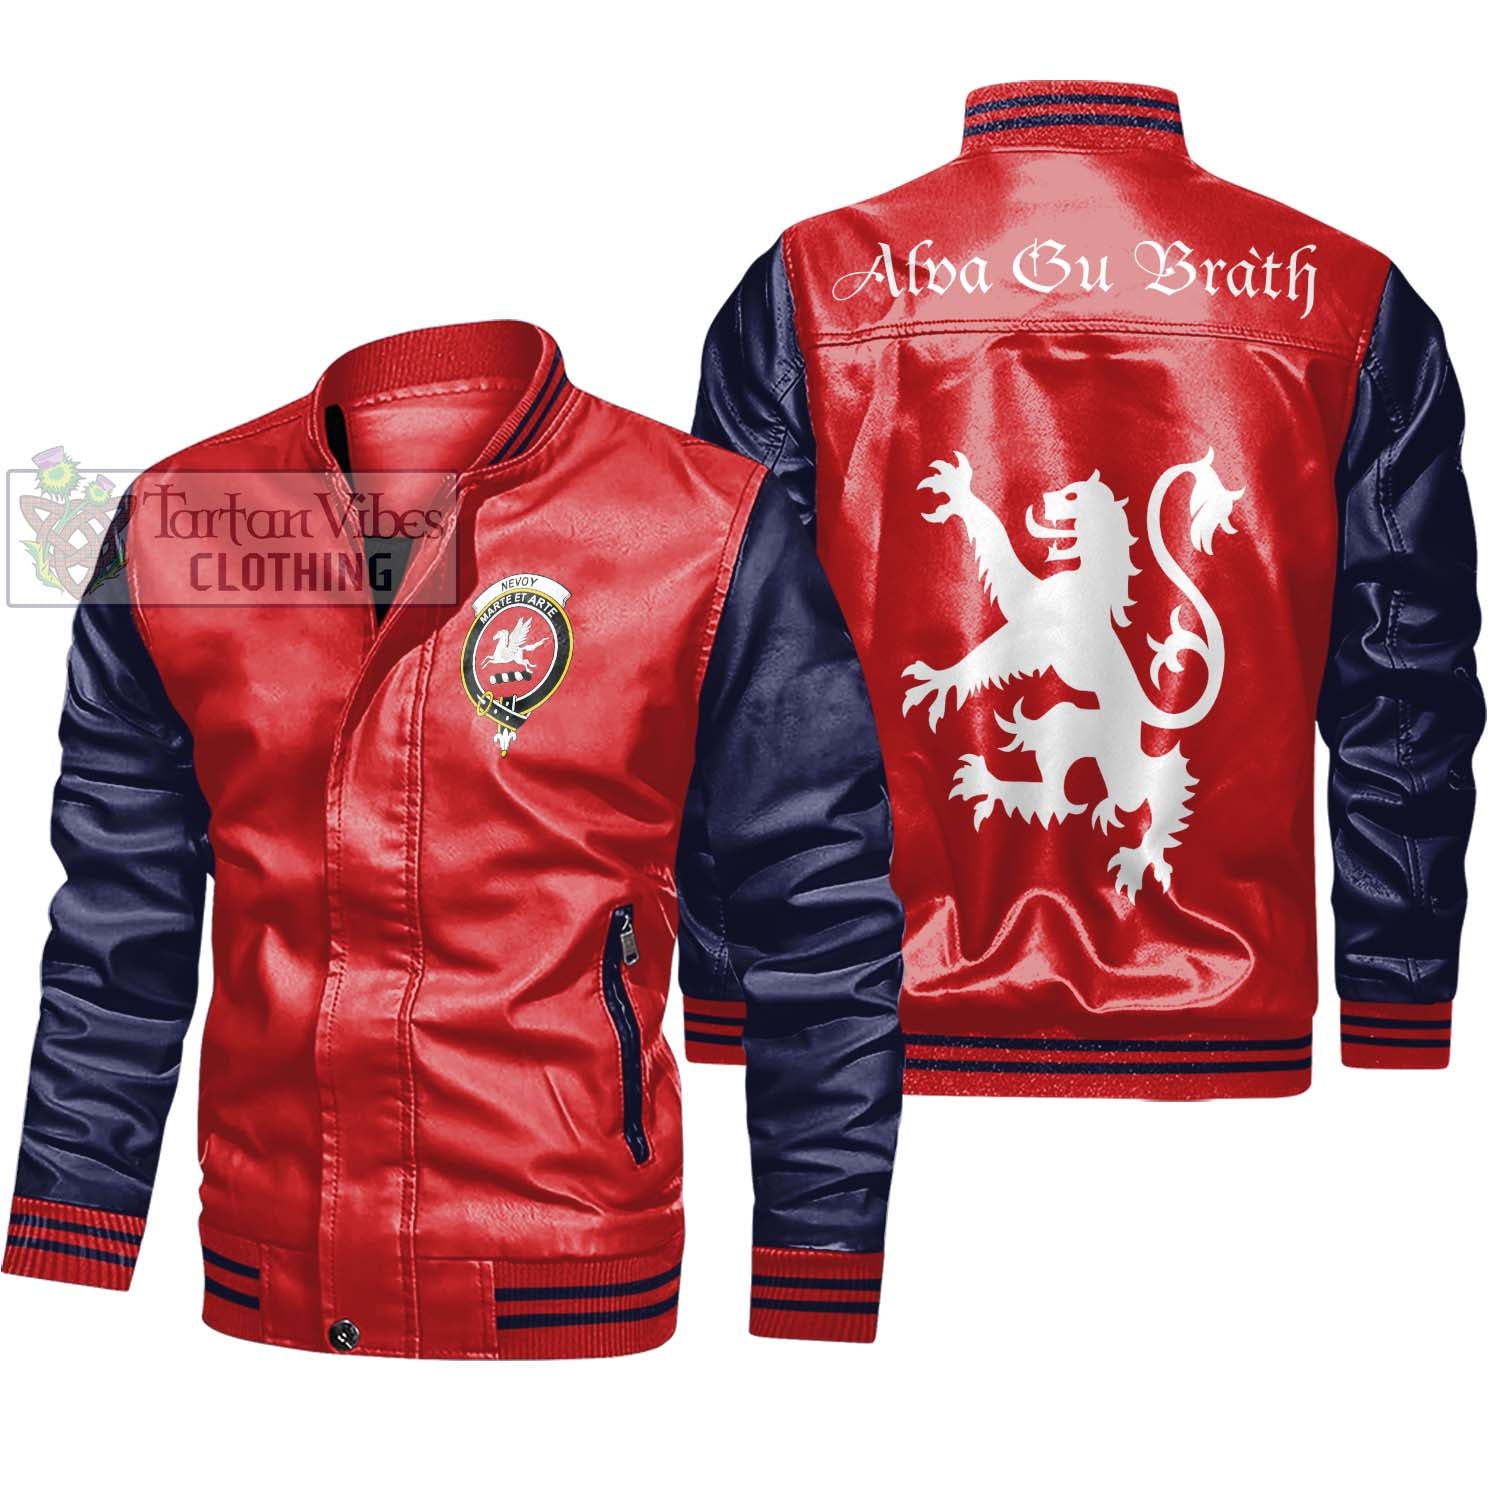 Tartan Vibes Clothing Nevoy Family Crest Leather Bomber Jacket Lion Rampant Alba Gu Brath Style